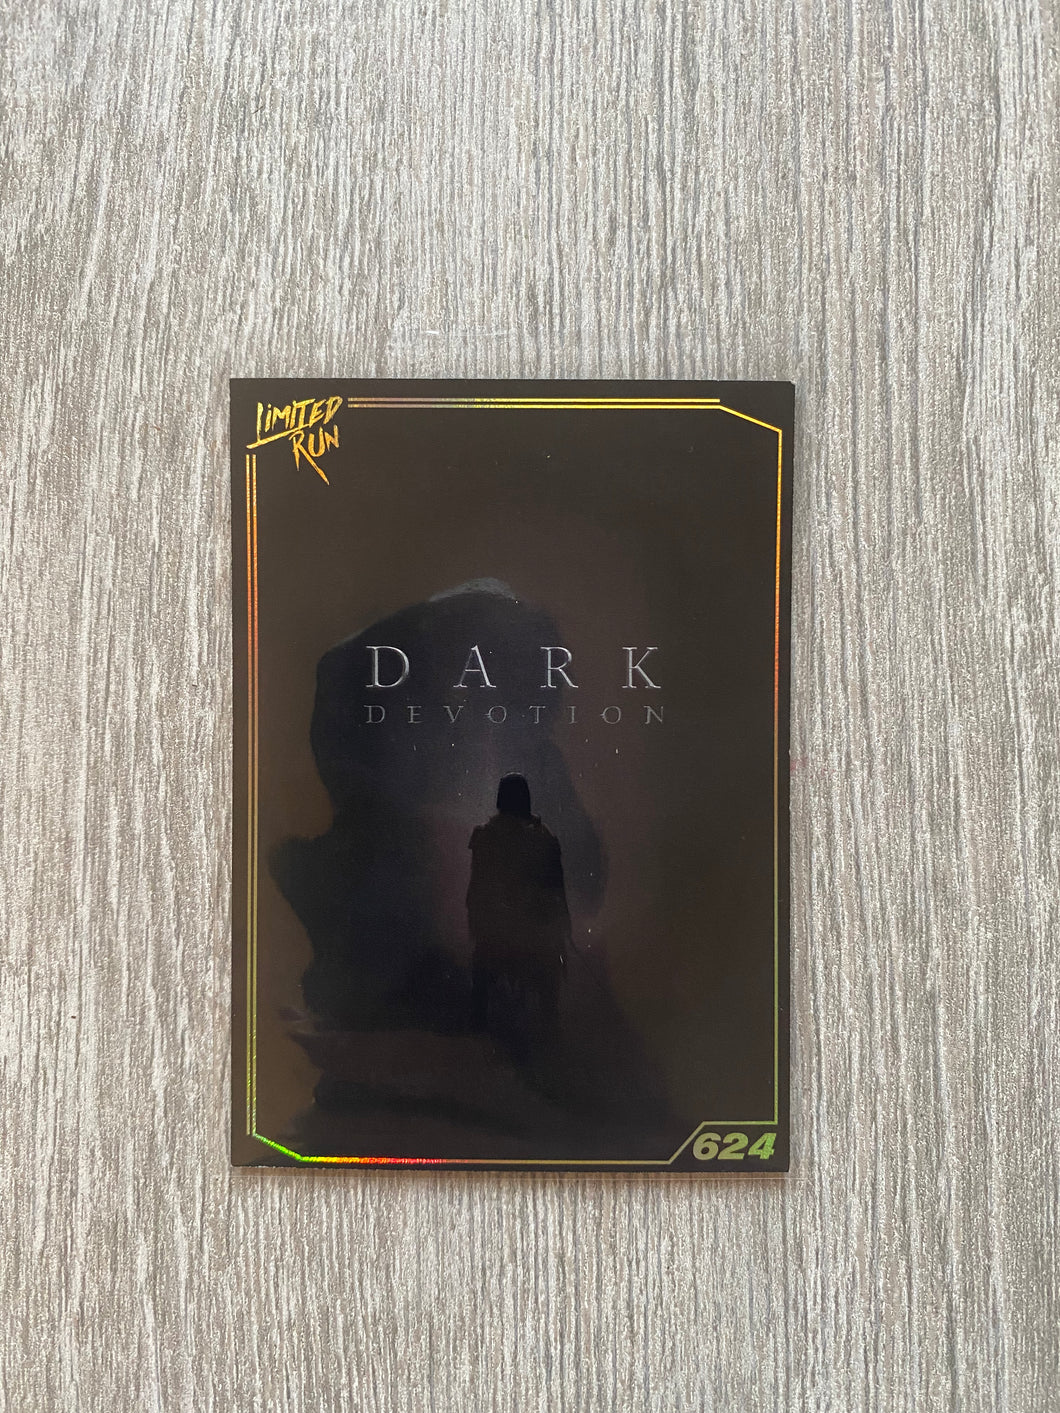 Gen1 #624 Gold Dark devotion Limited run games Trading card